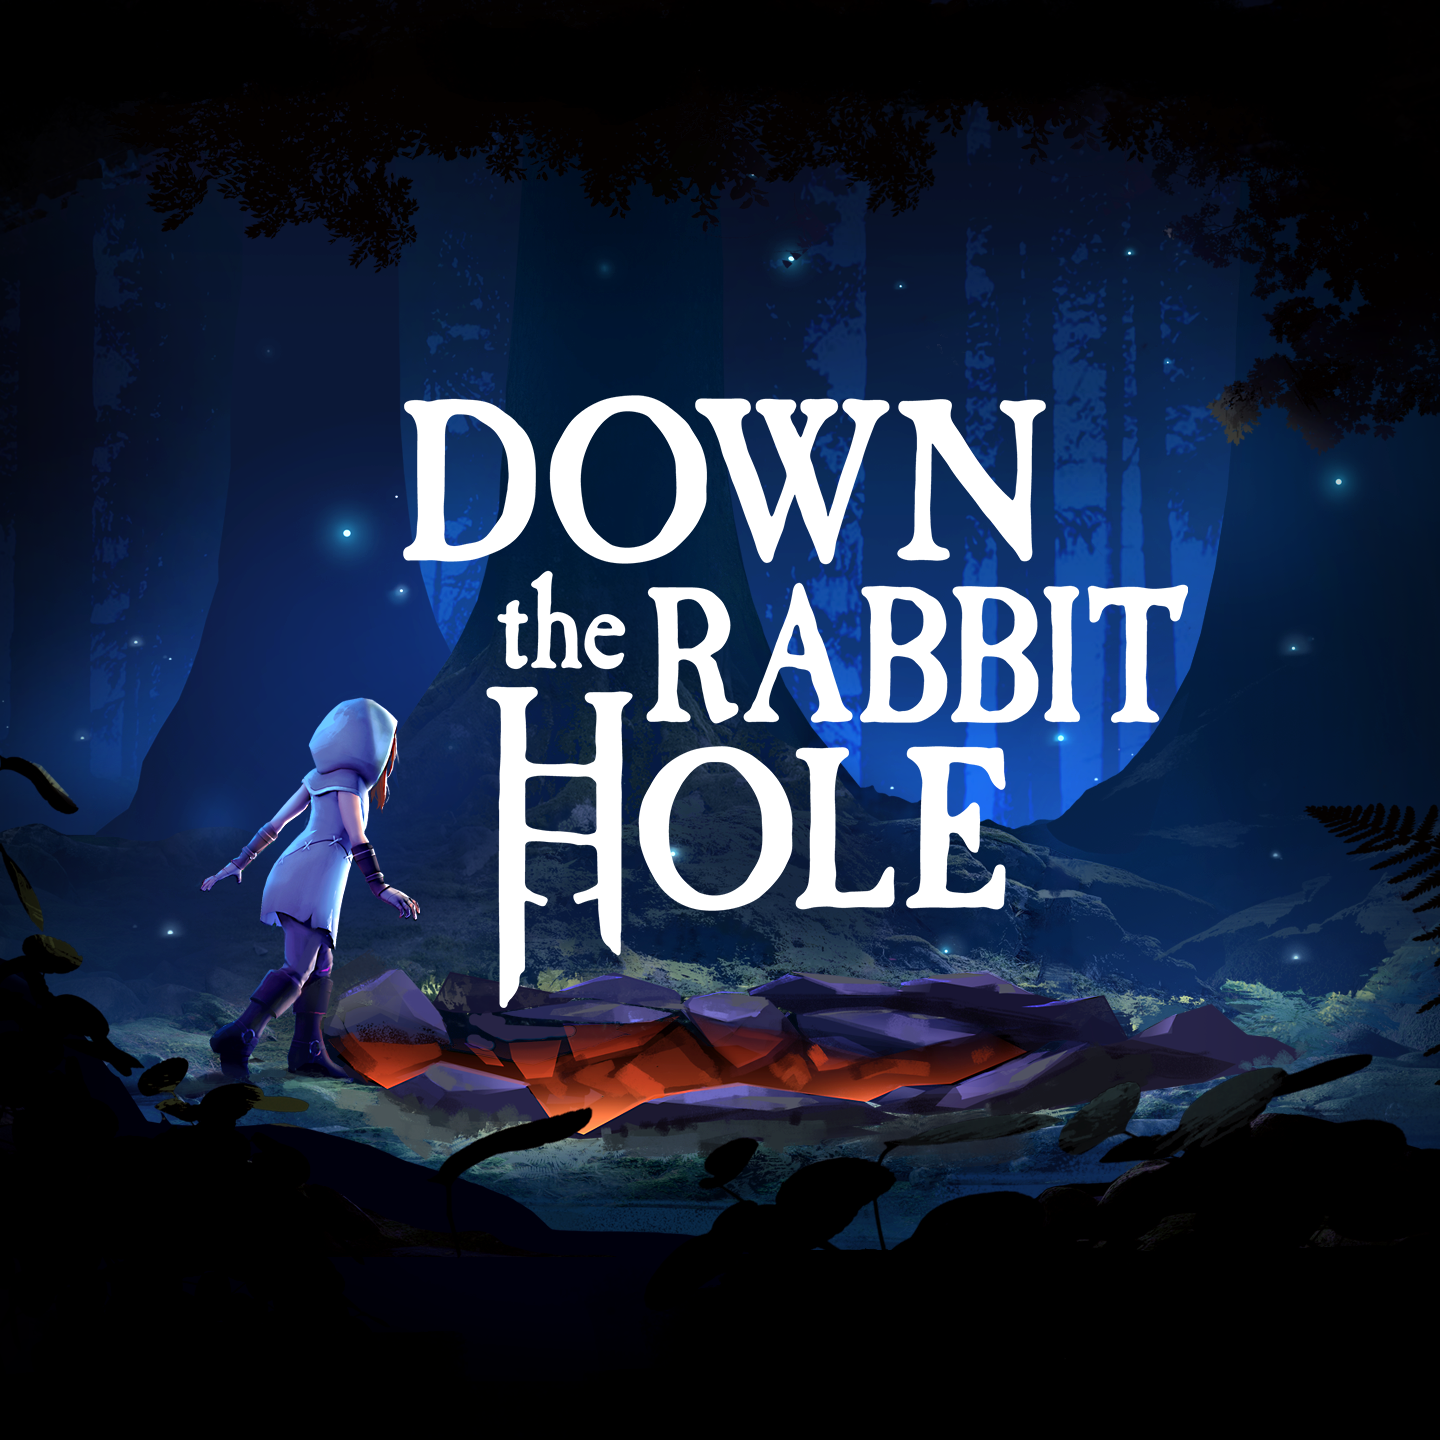 Rabbit hole игра. Down the Rabbit hole. The Rabbit hole VR. Down the Rabit hole.